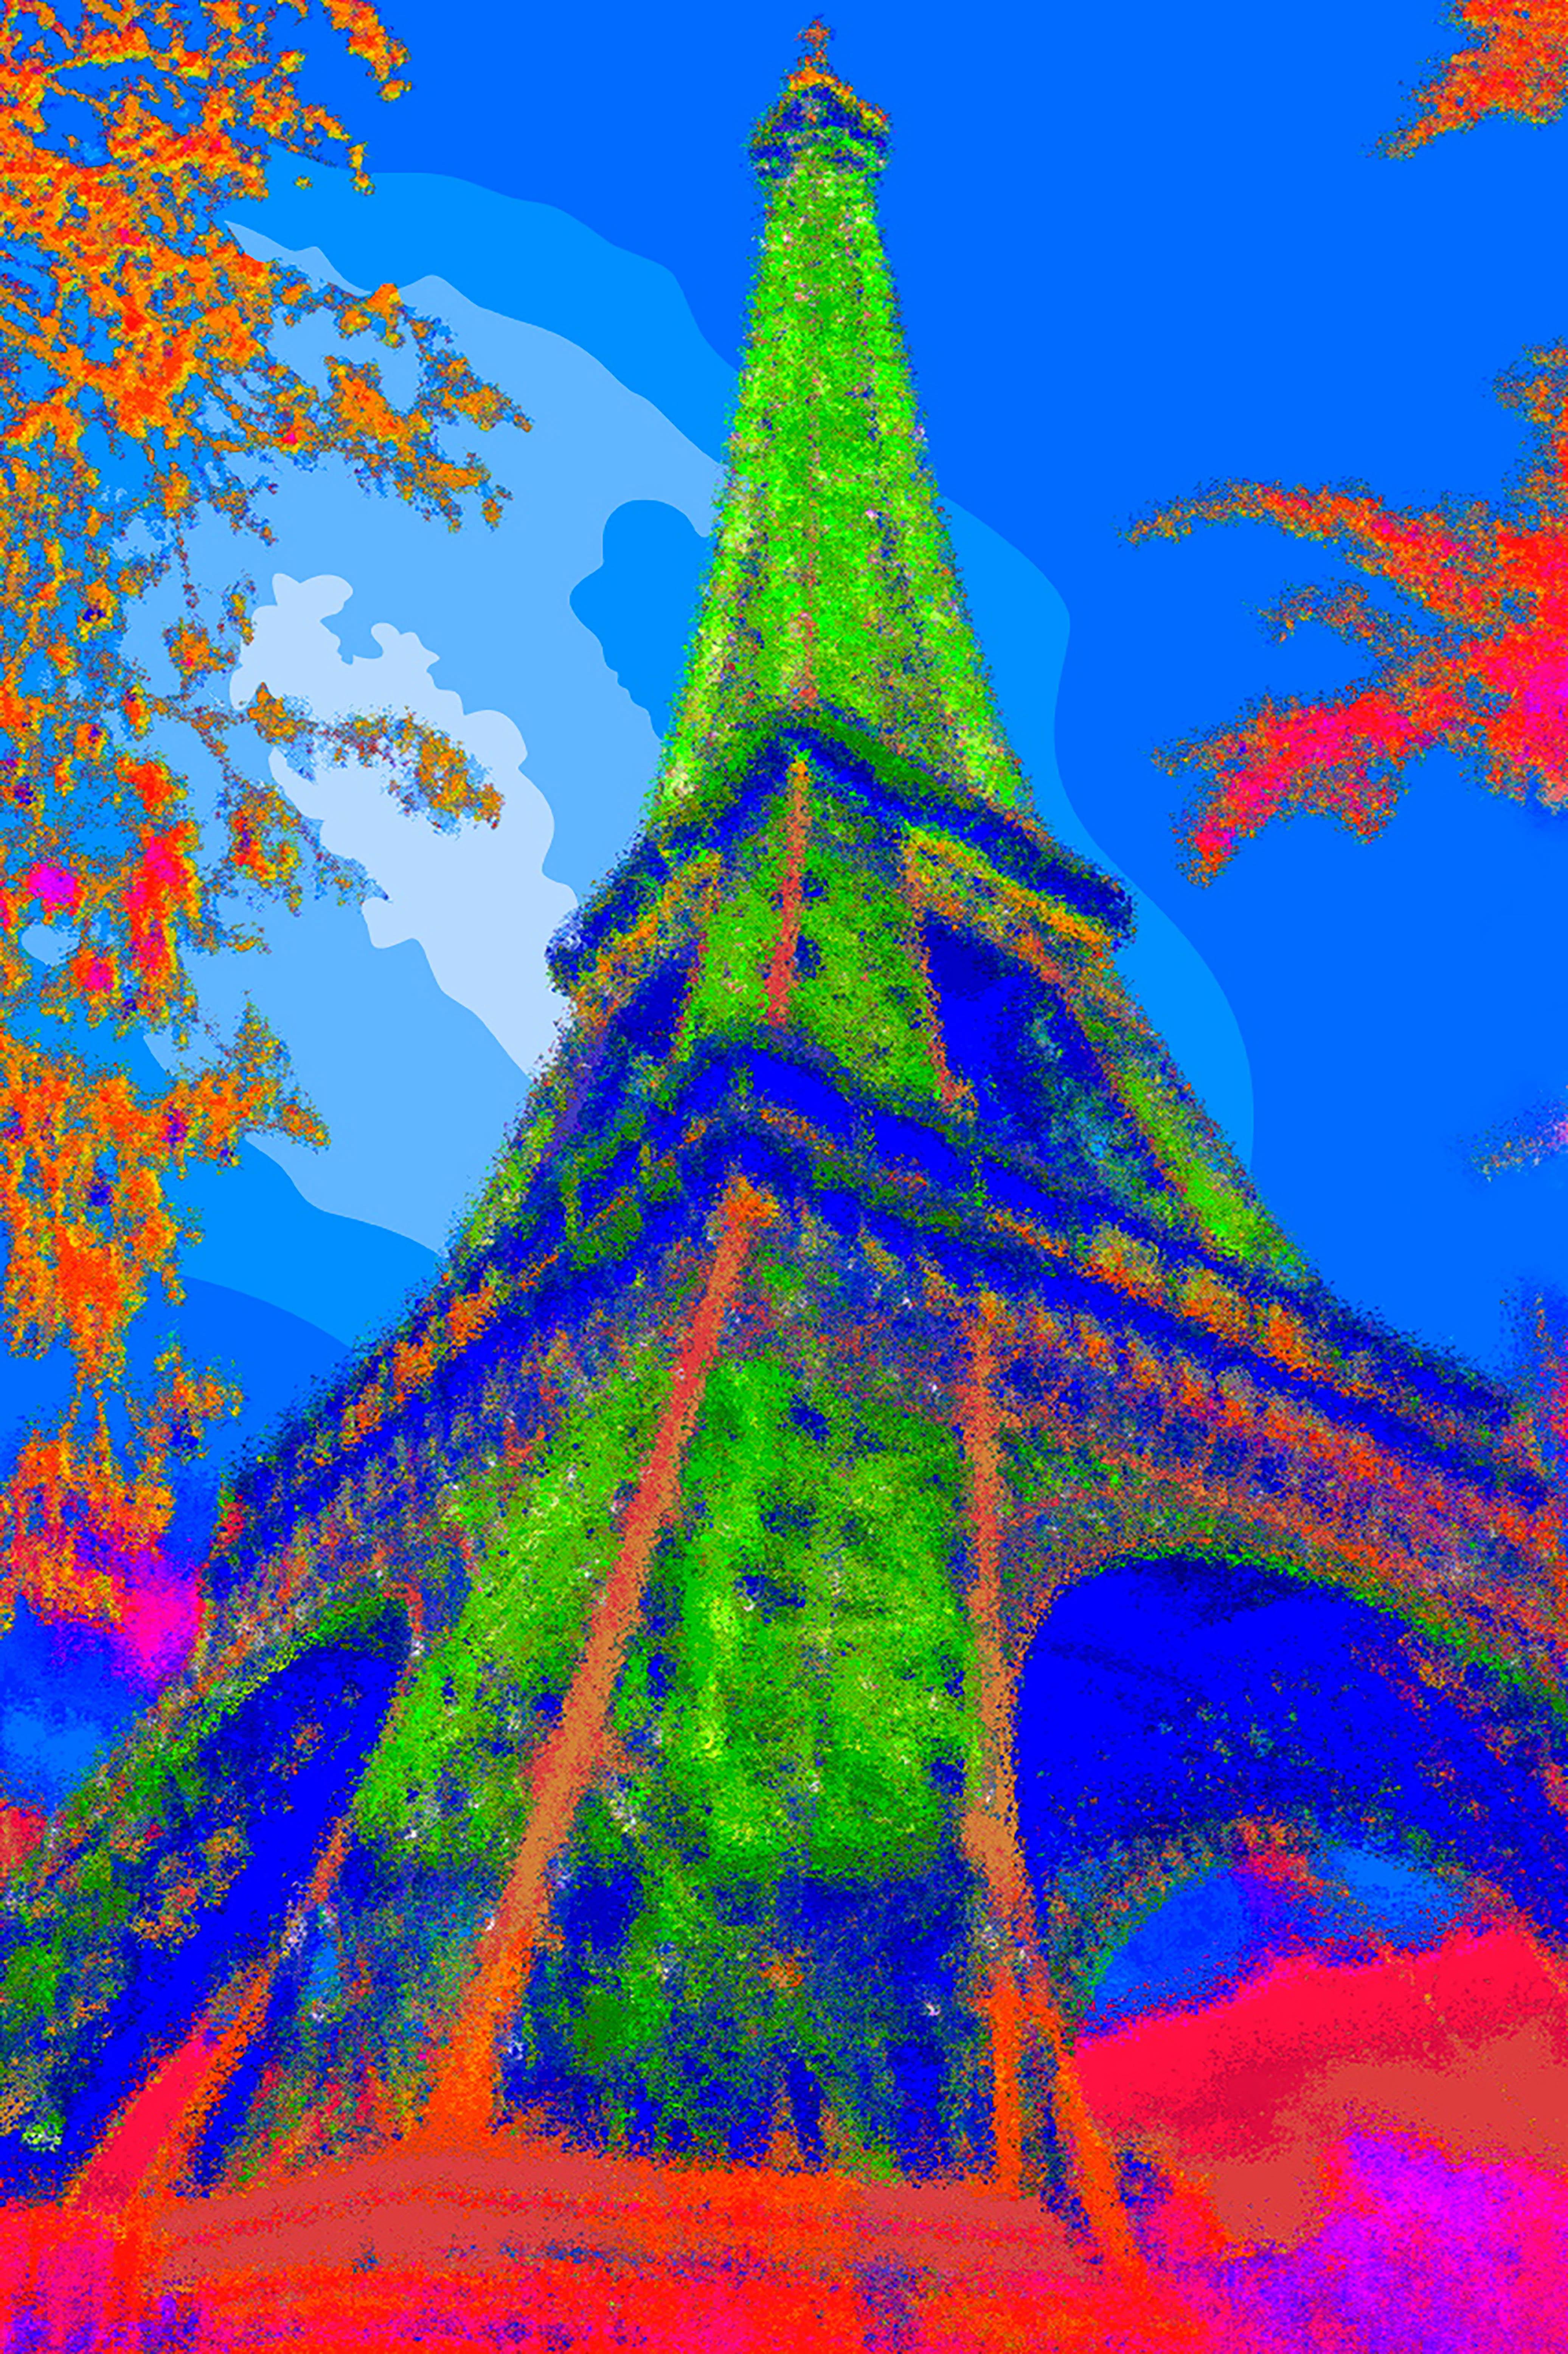 Eiffel Tower - Photograph by Francis Apesteguy